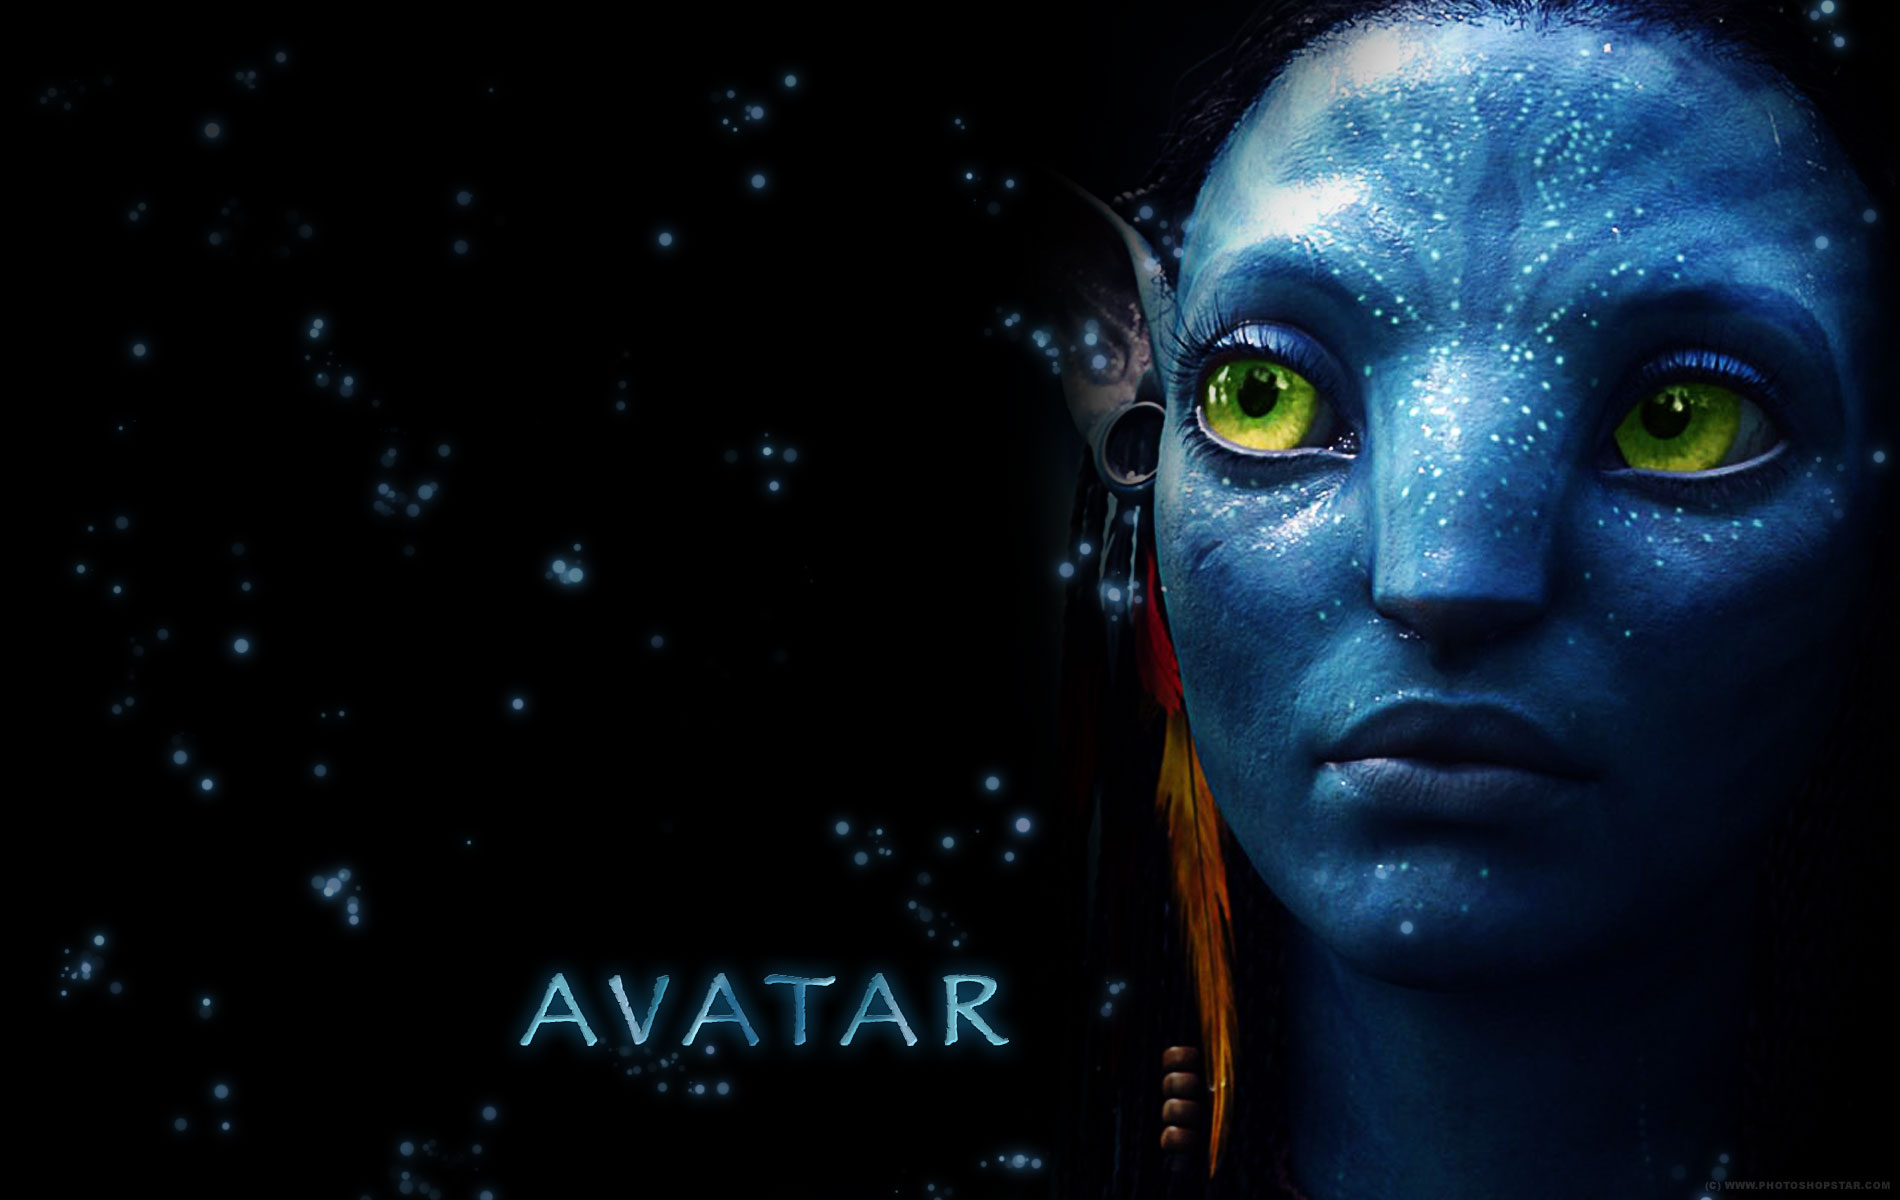 Desktop Wallpaper Pandora From Avatar Movie  Hd Image Picture Background  Zopjvp